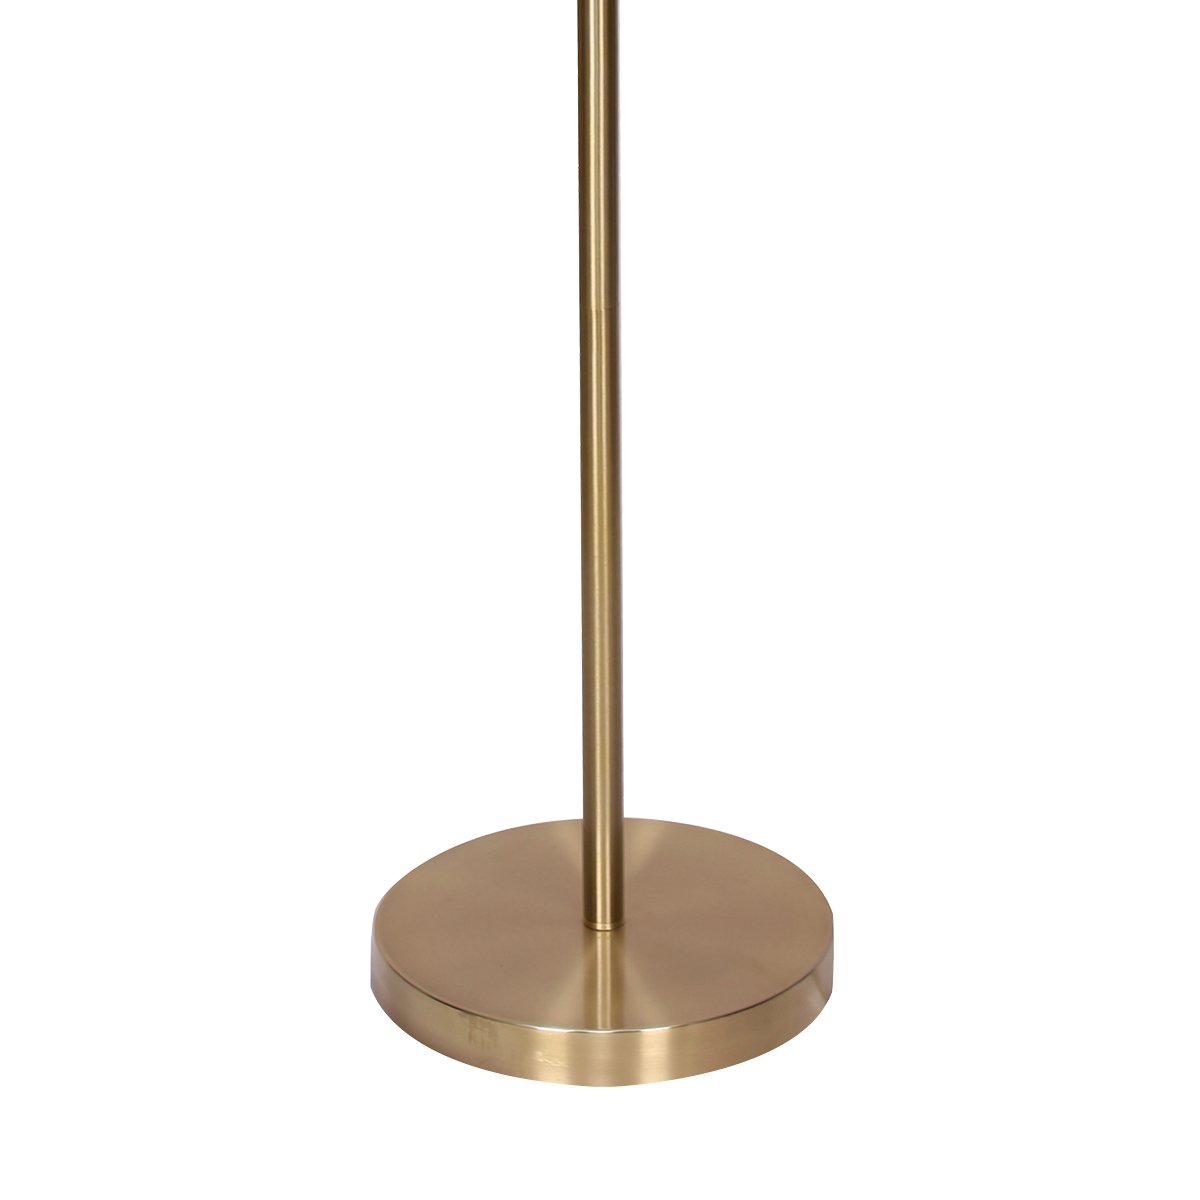 Brushed Gold Height-Adjustable Metal Floor Lamp